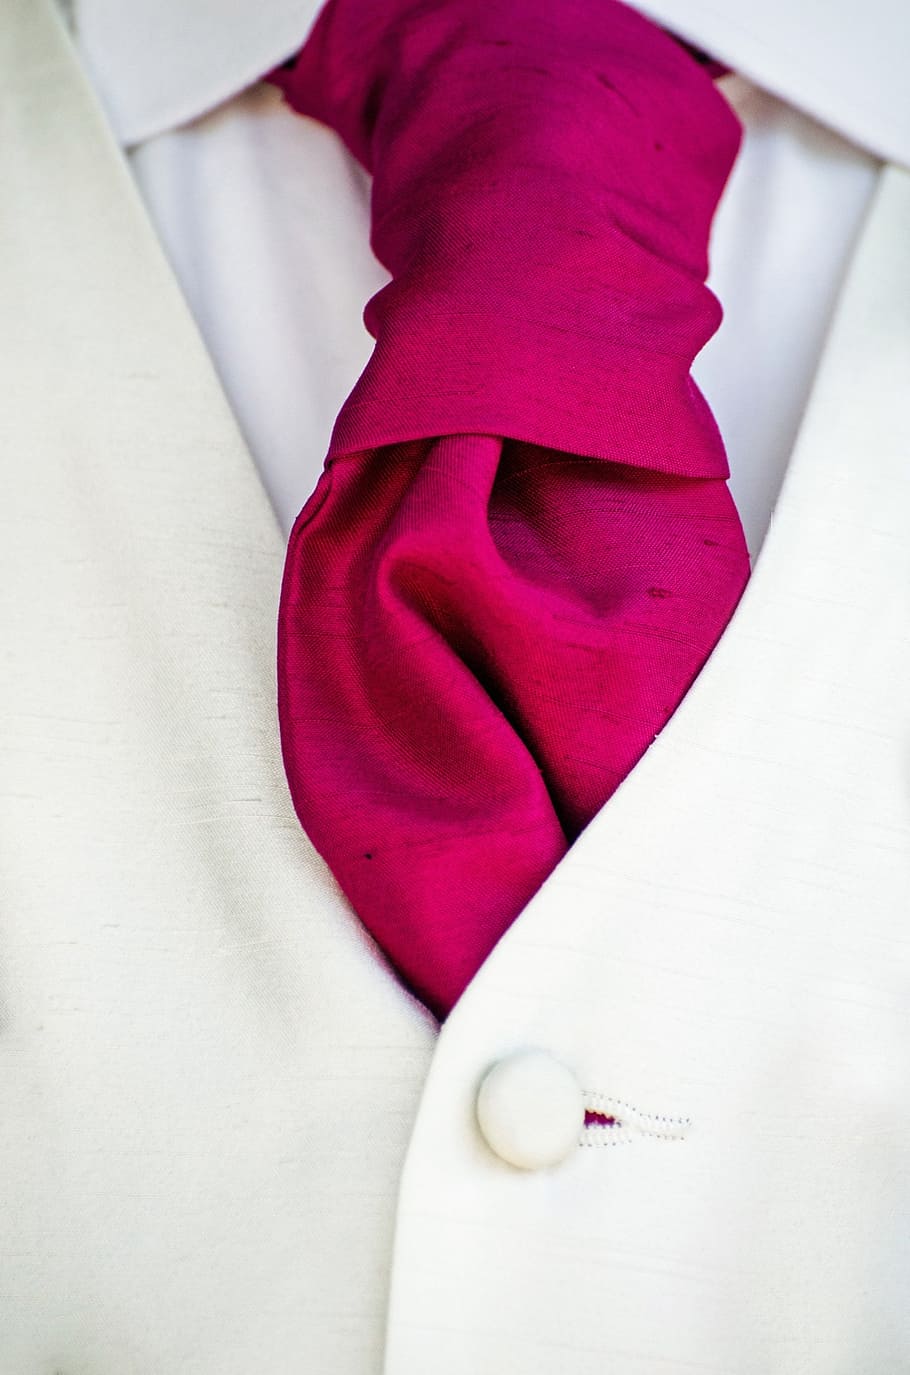 closeup, white, suit jacket, pink, necktie, tie, groom, corsage, ceremony, pinned